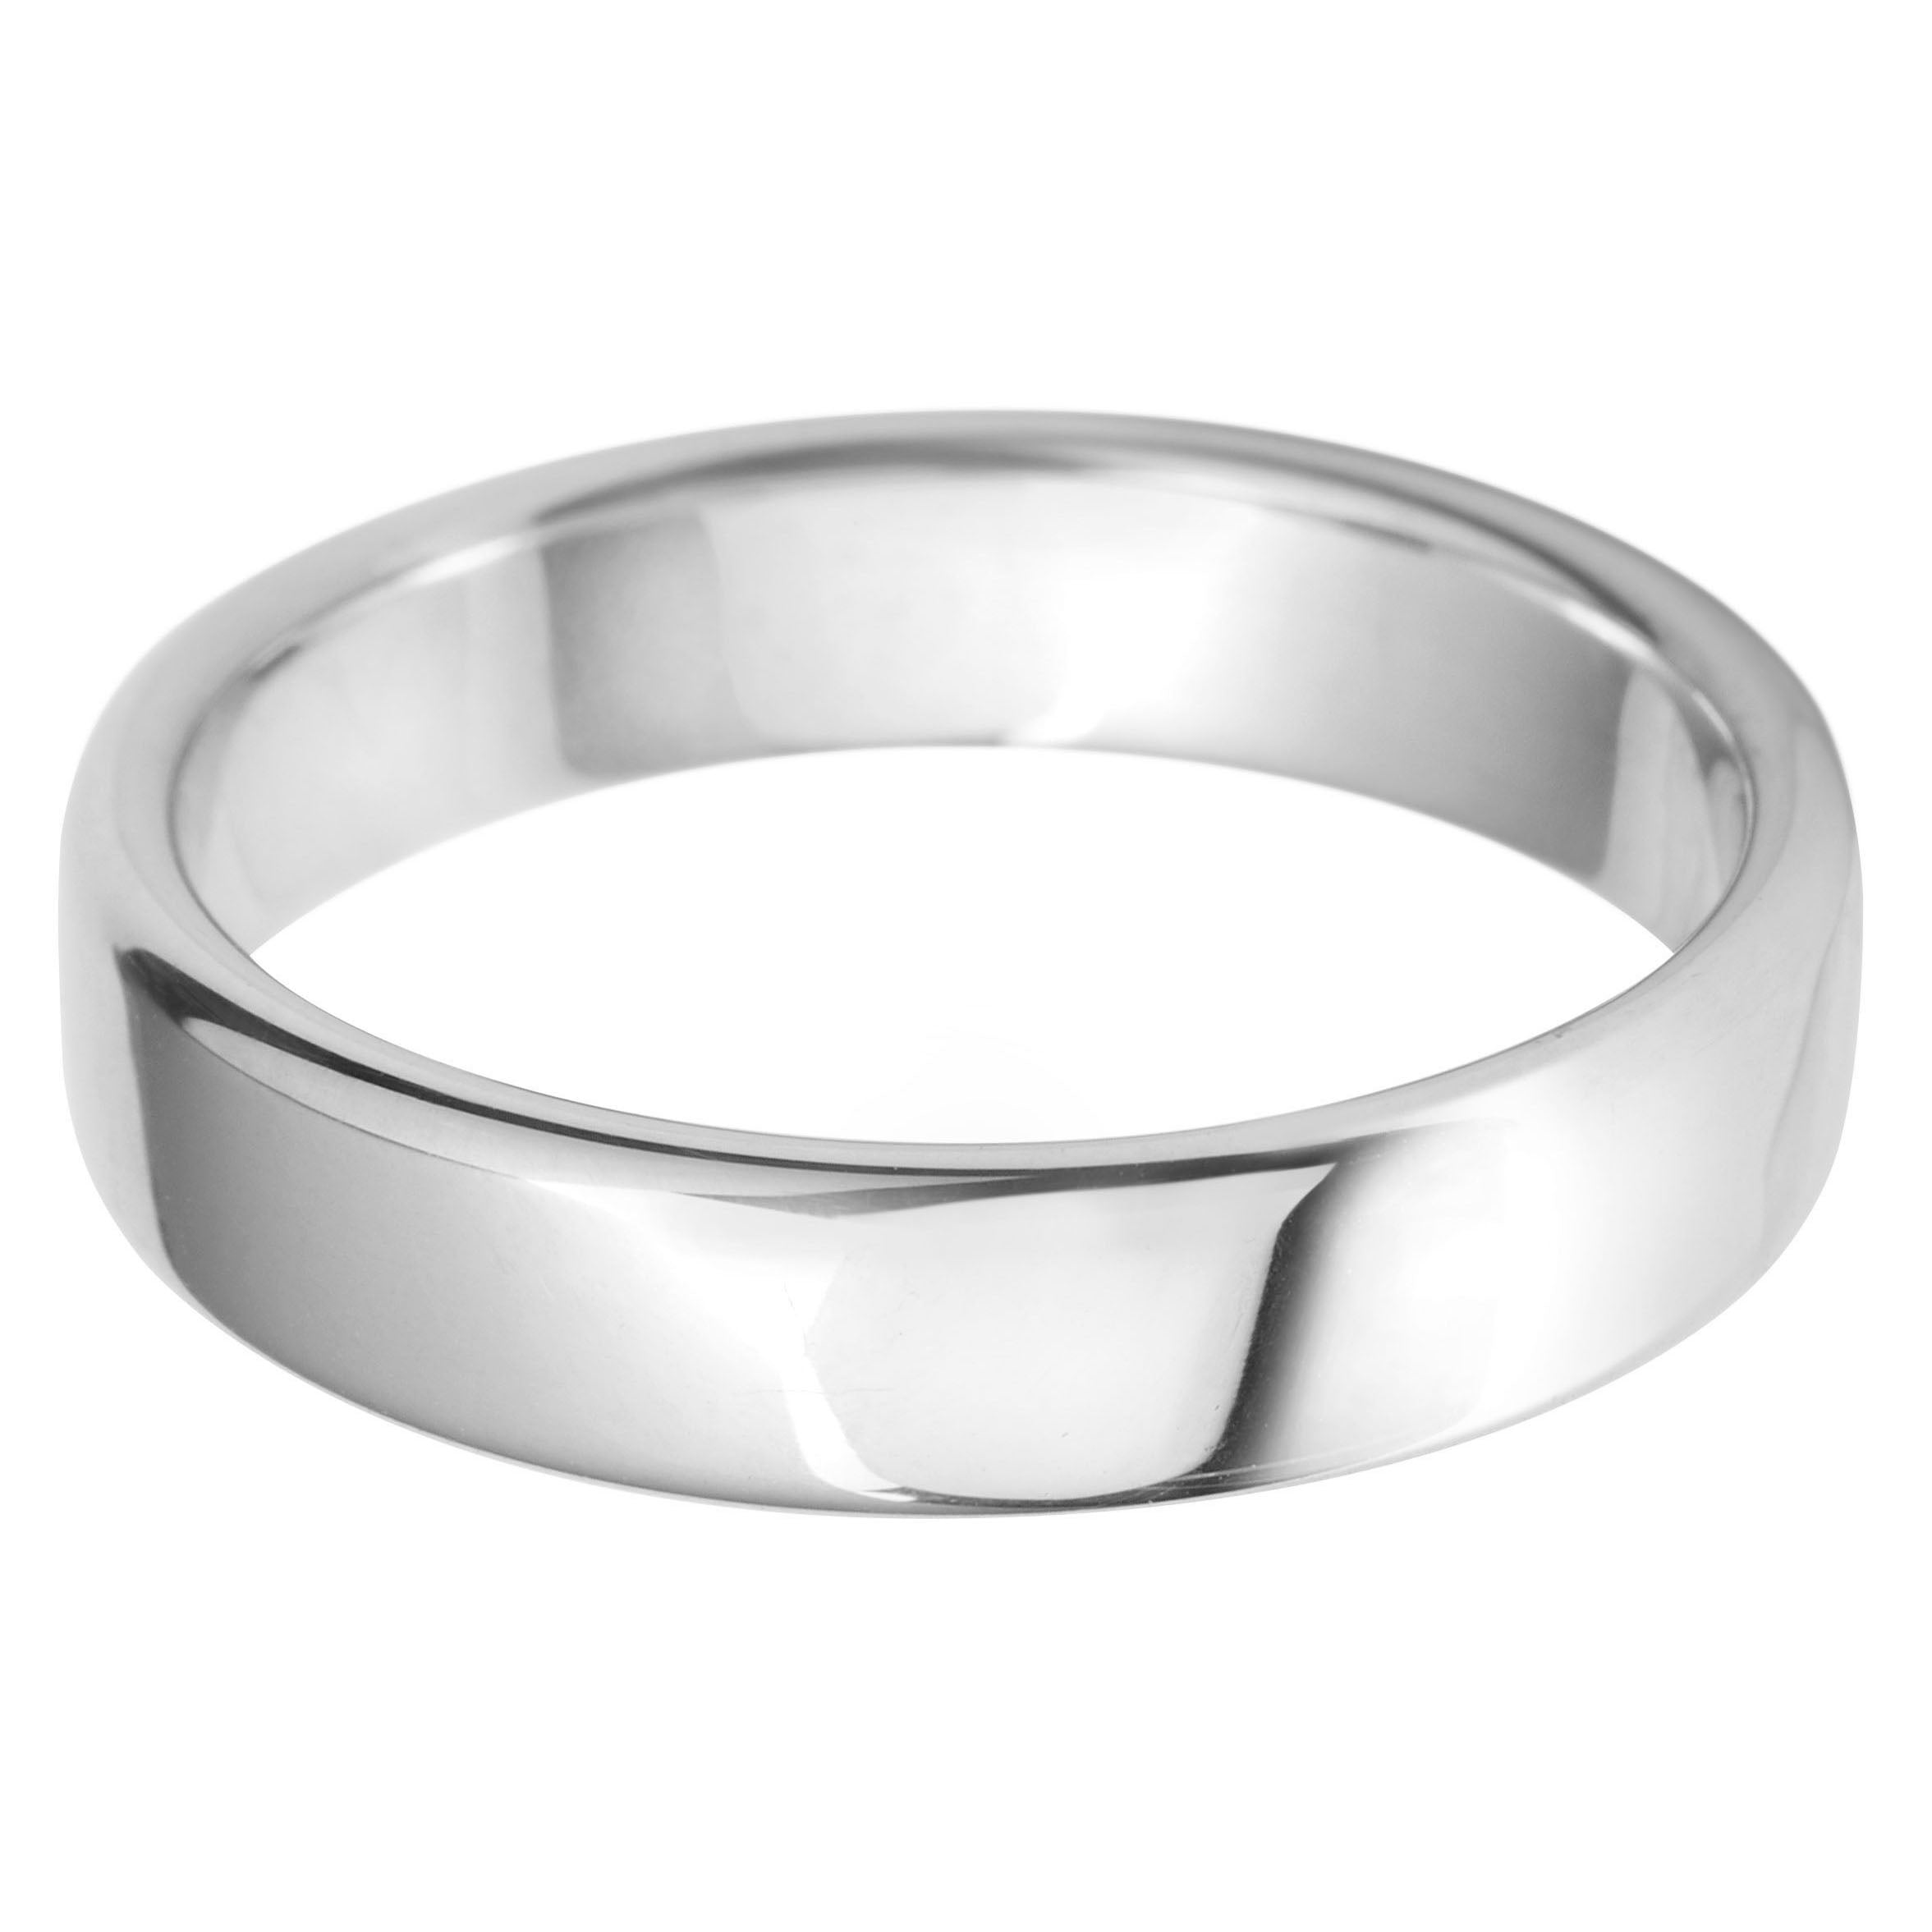 5mm Rounded Flat Medium Weight Wedding Ring